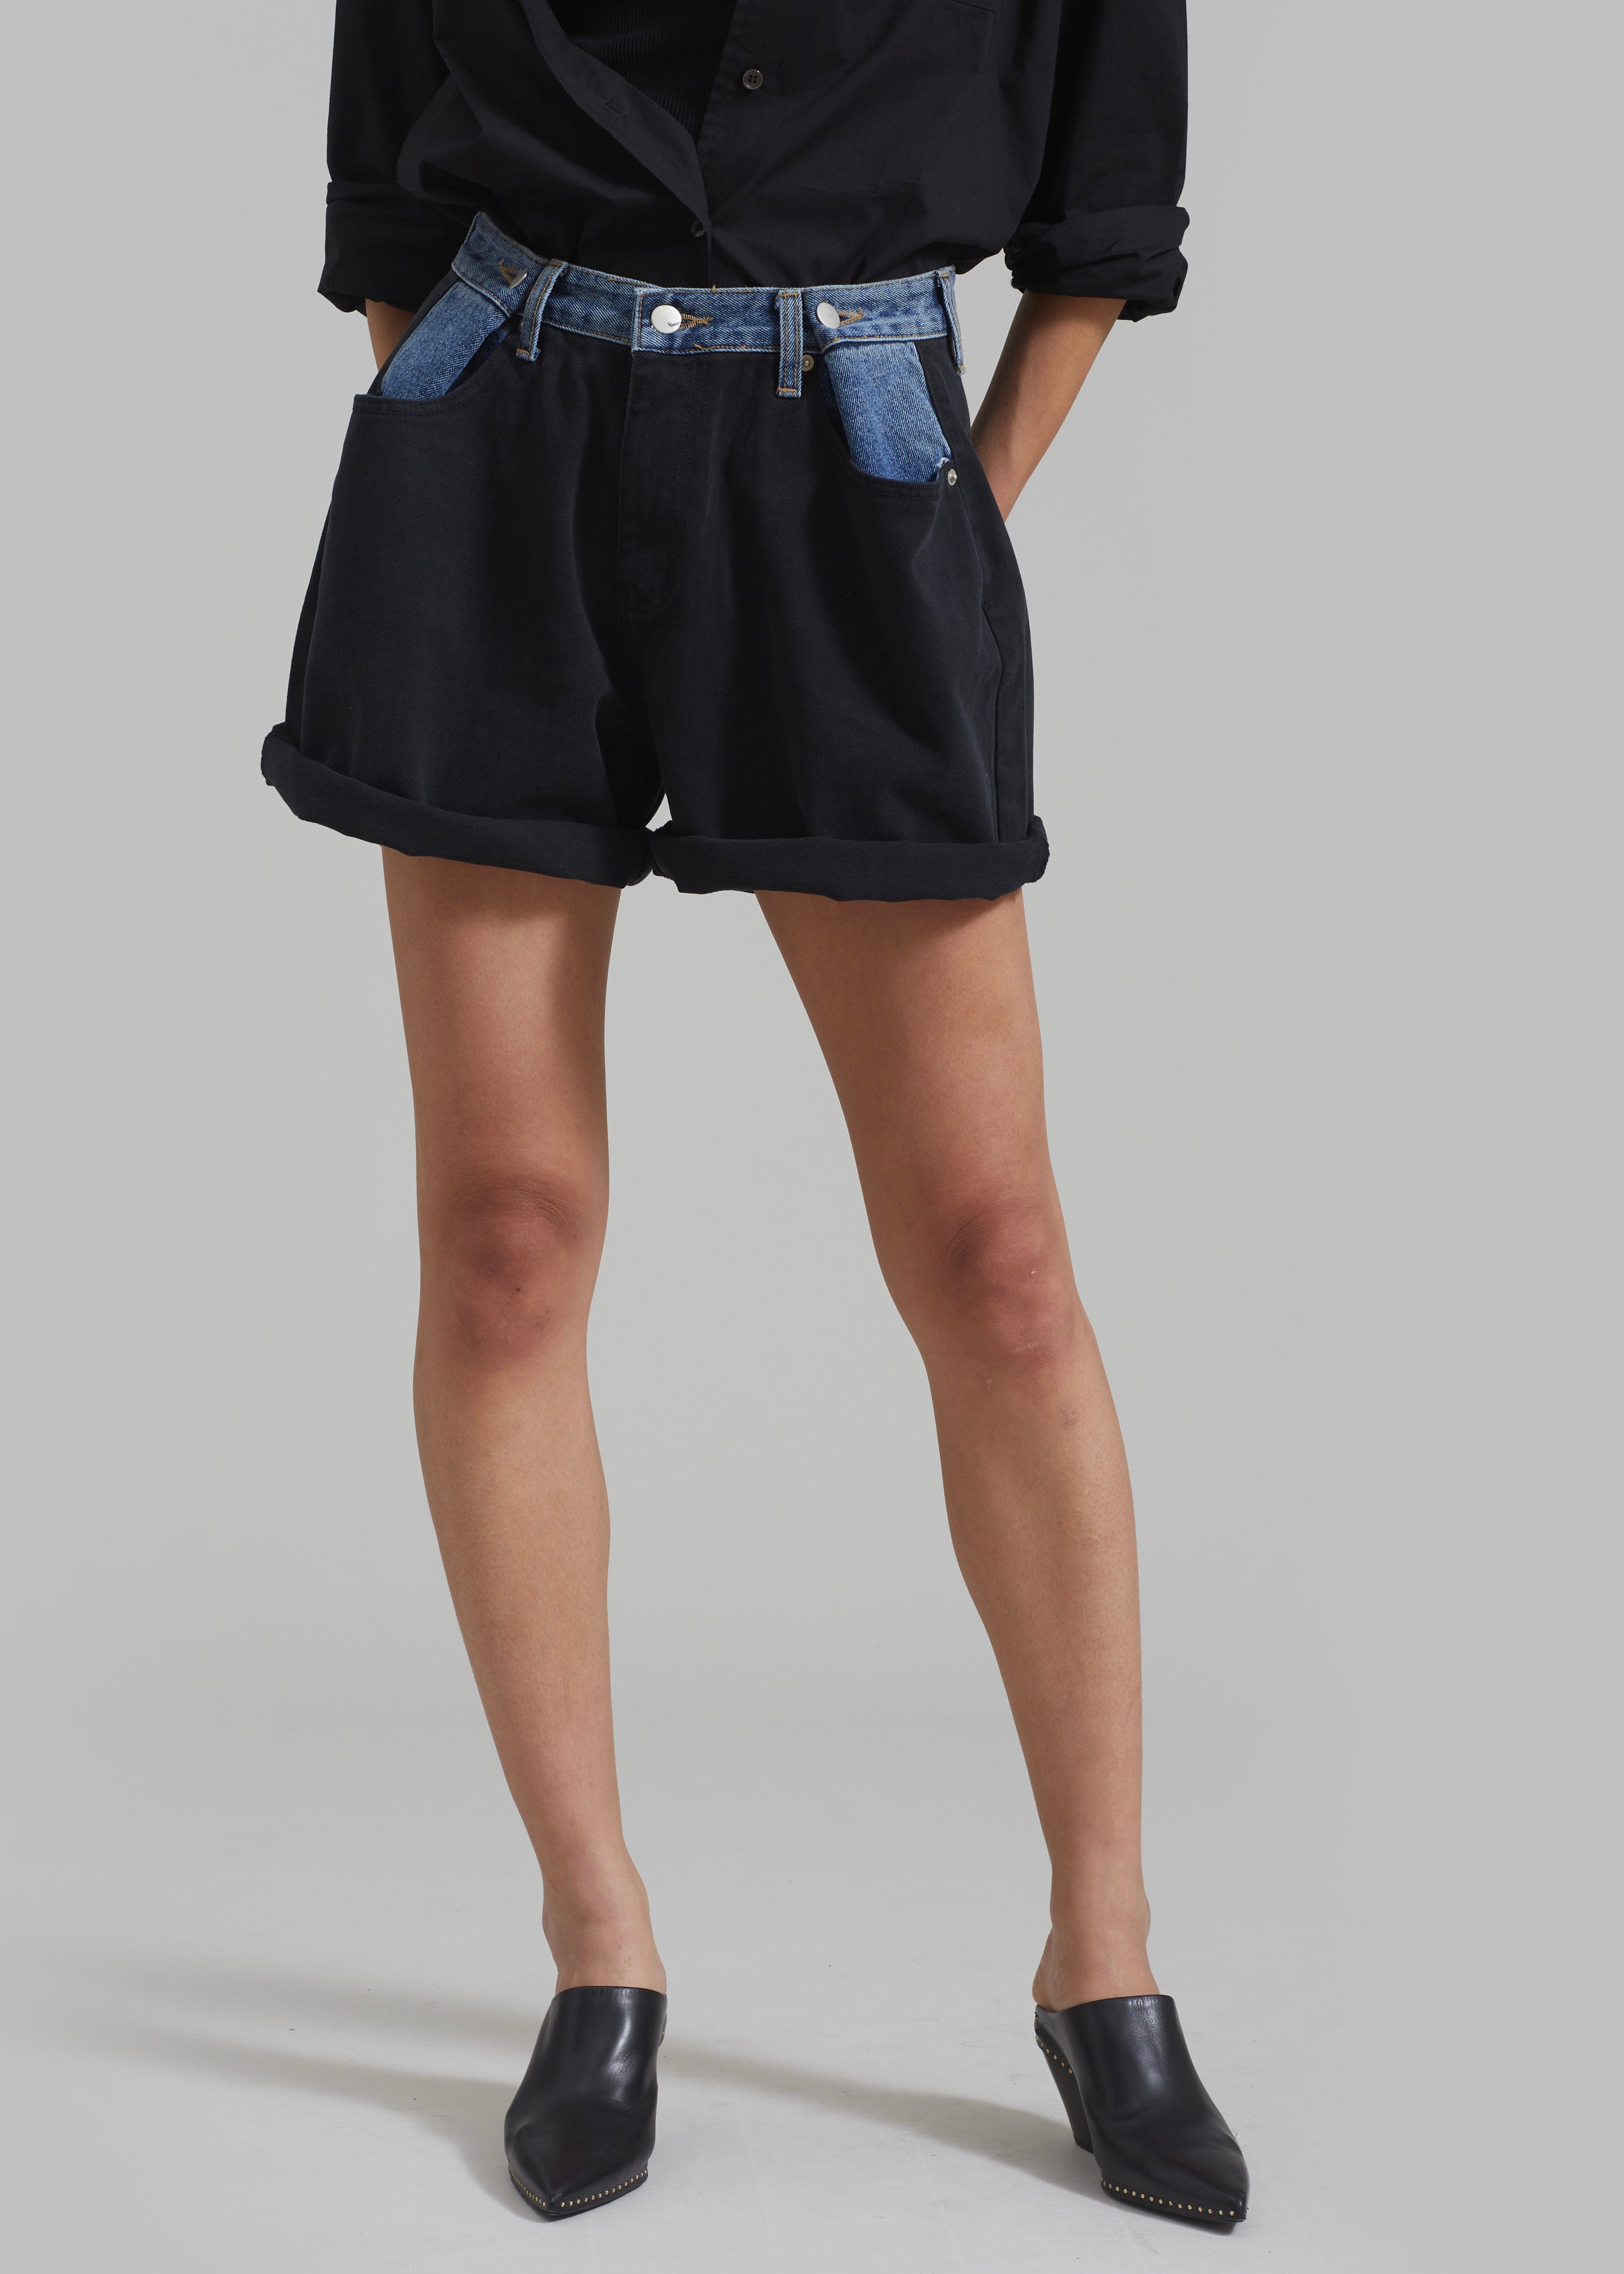 Hayla Contrast Denim Shorts - Black/Blue